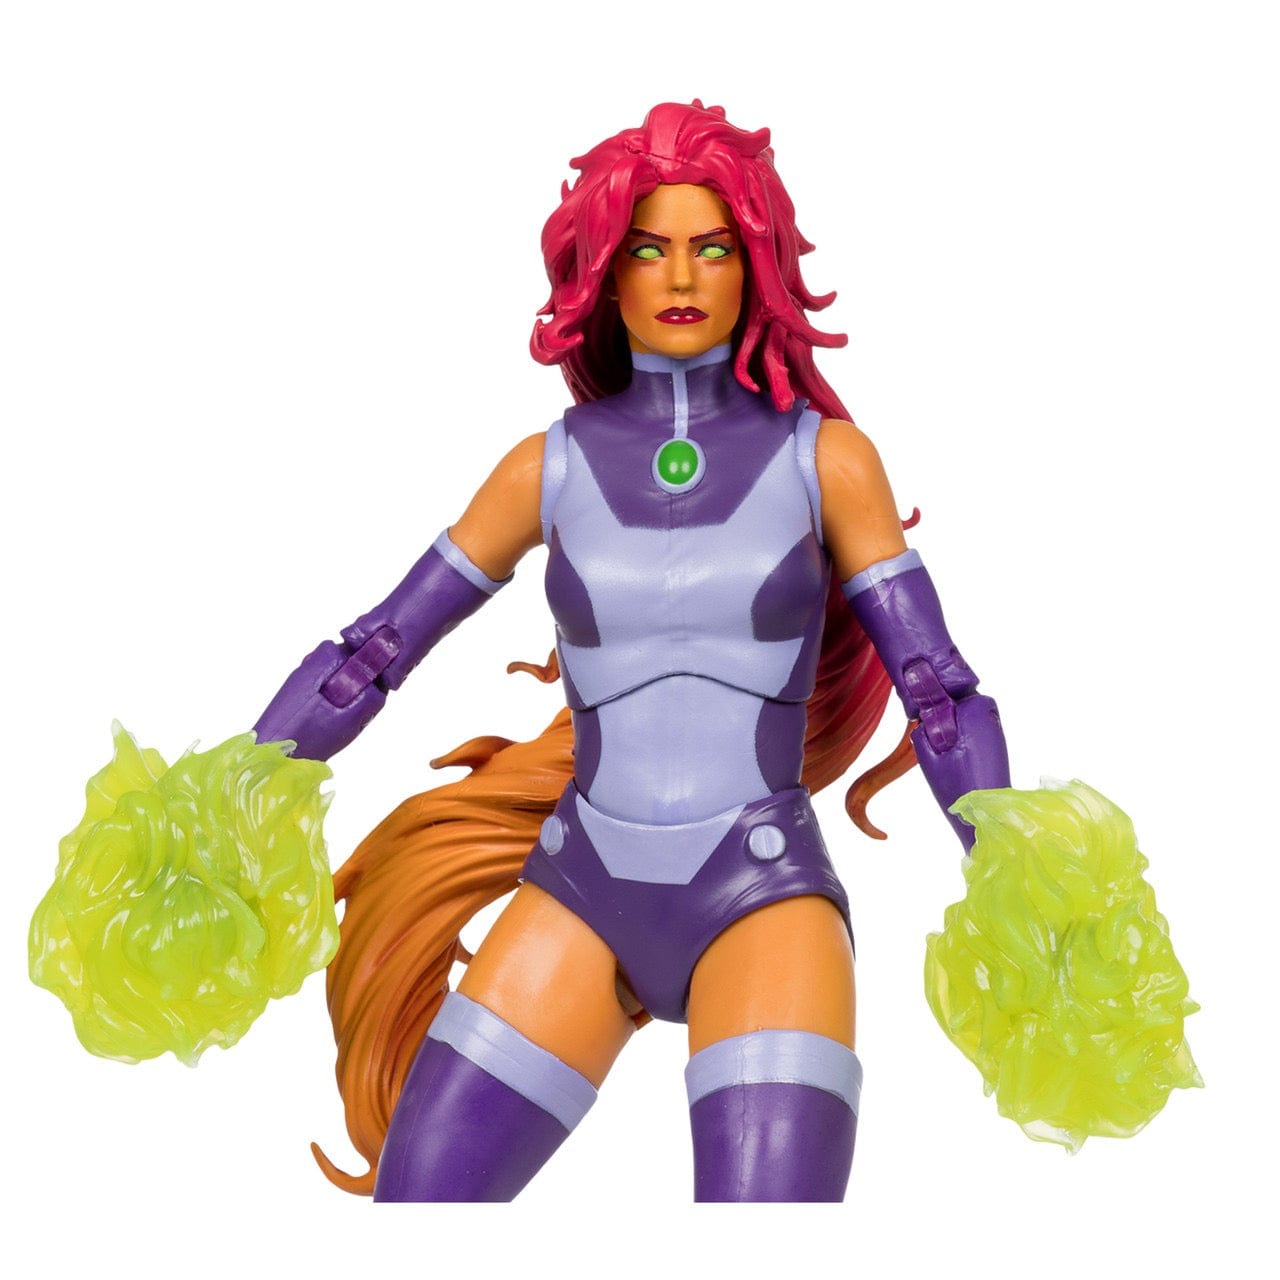 McFarlane Toys DC Multiverse McFarlane Collector Edition #11 Starfire Action Figure